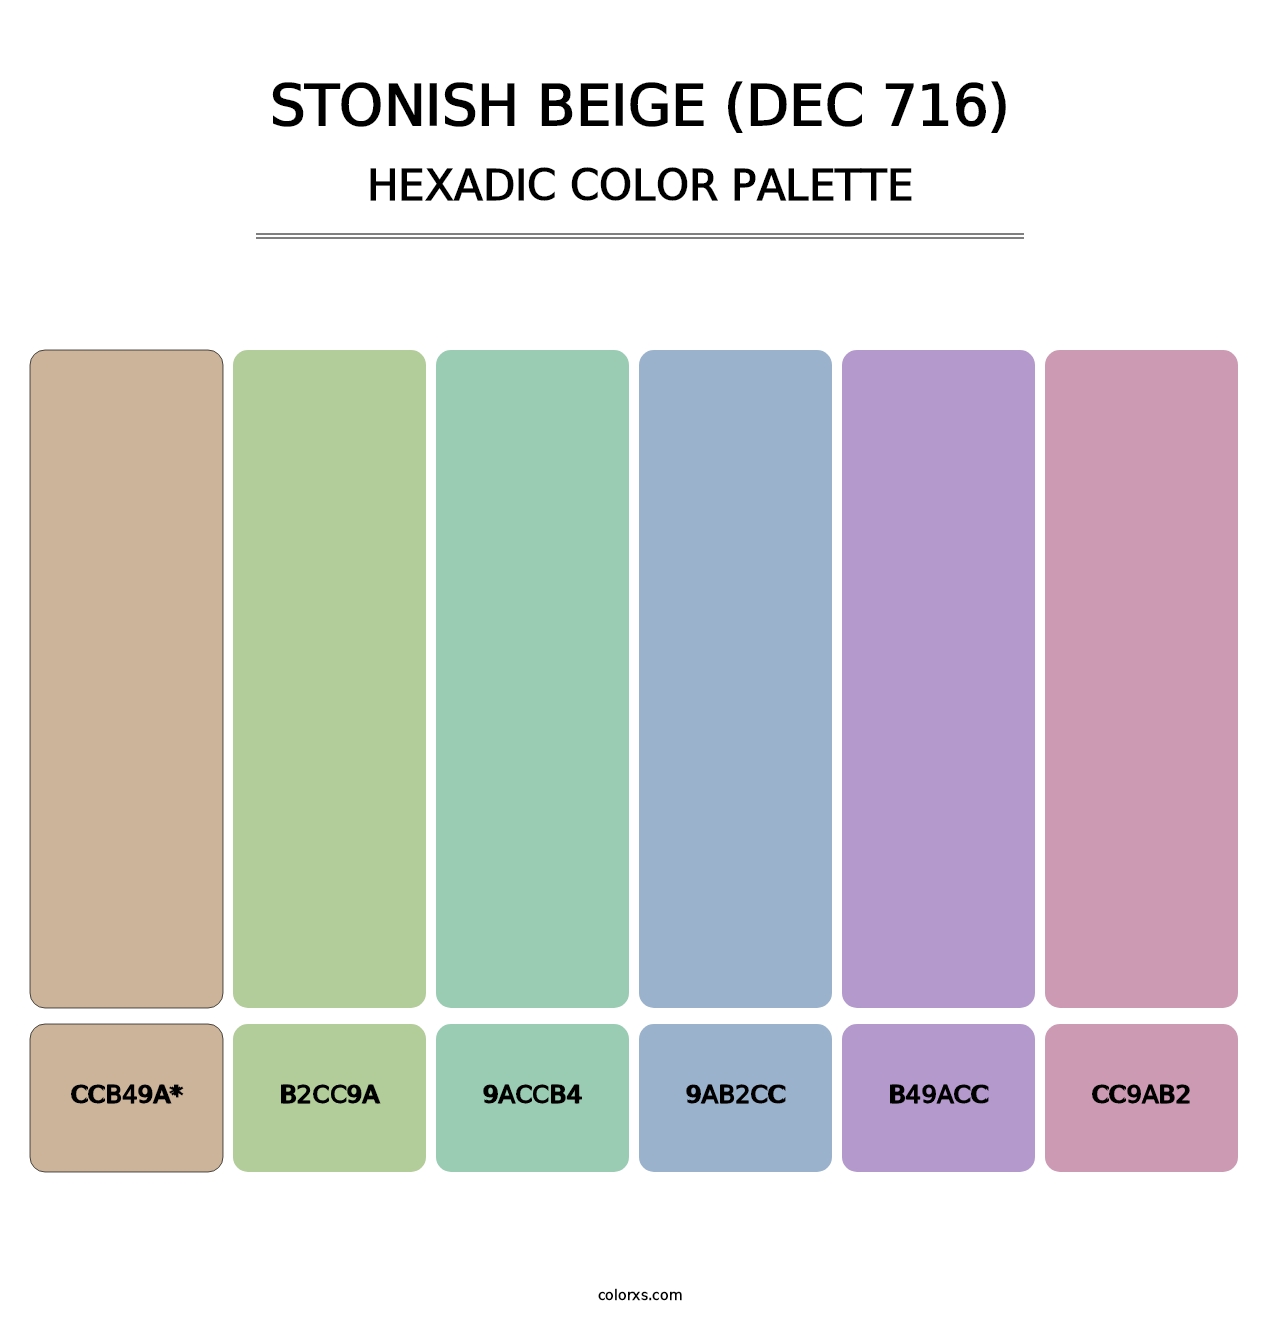 Stonish Beige (DEC 716) - Hexadic Color Palette